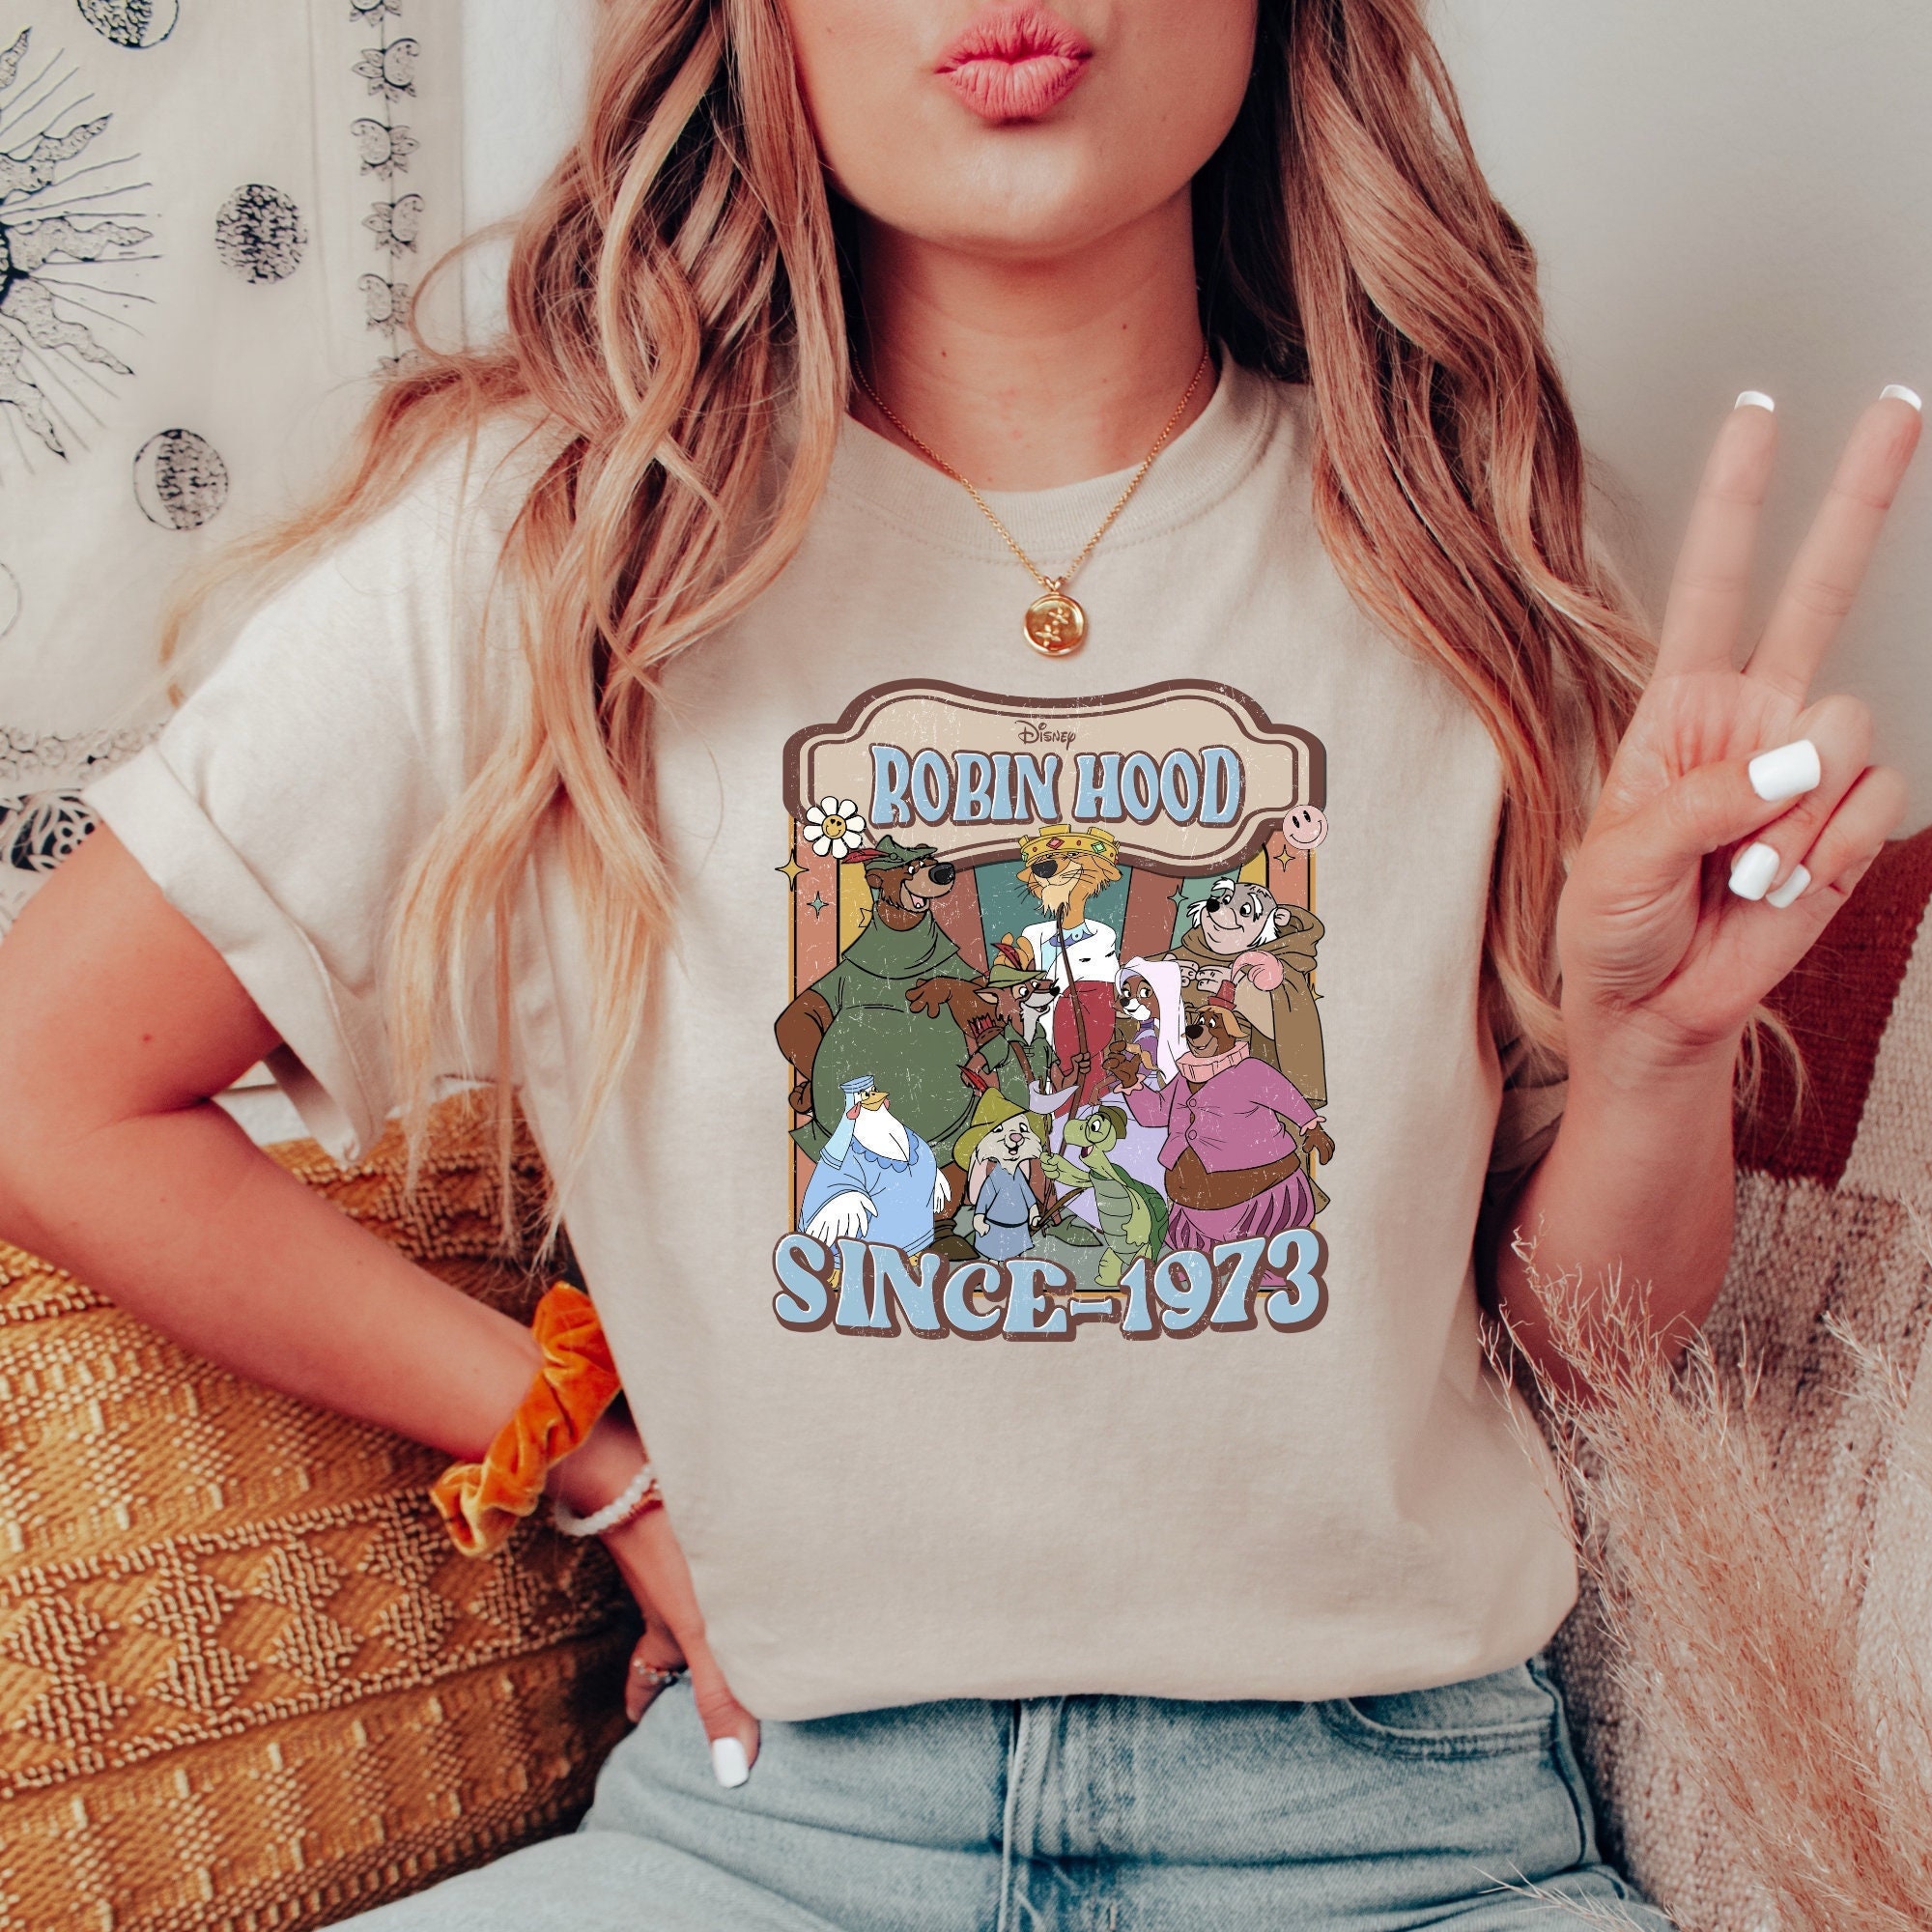 Robin Hood Characters Since 1973 Shirt, Magic Kingdom Trip Shirt